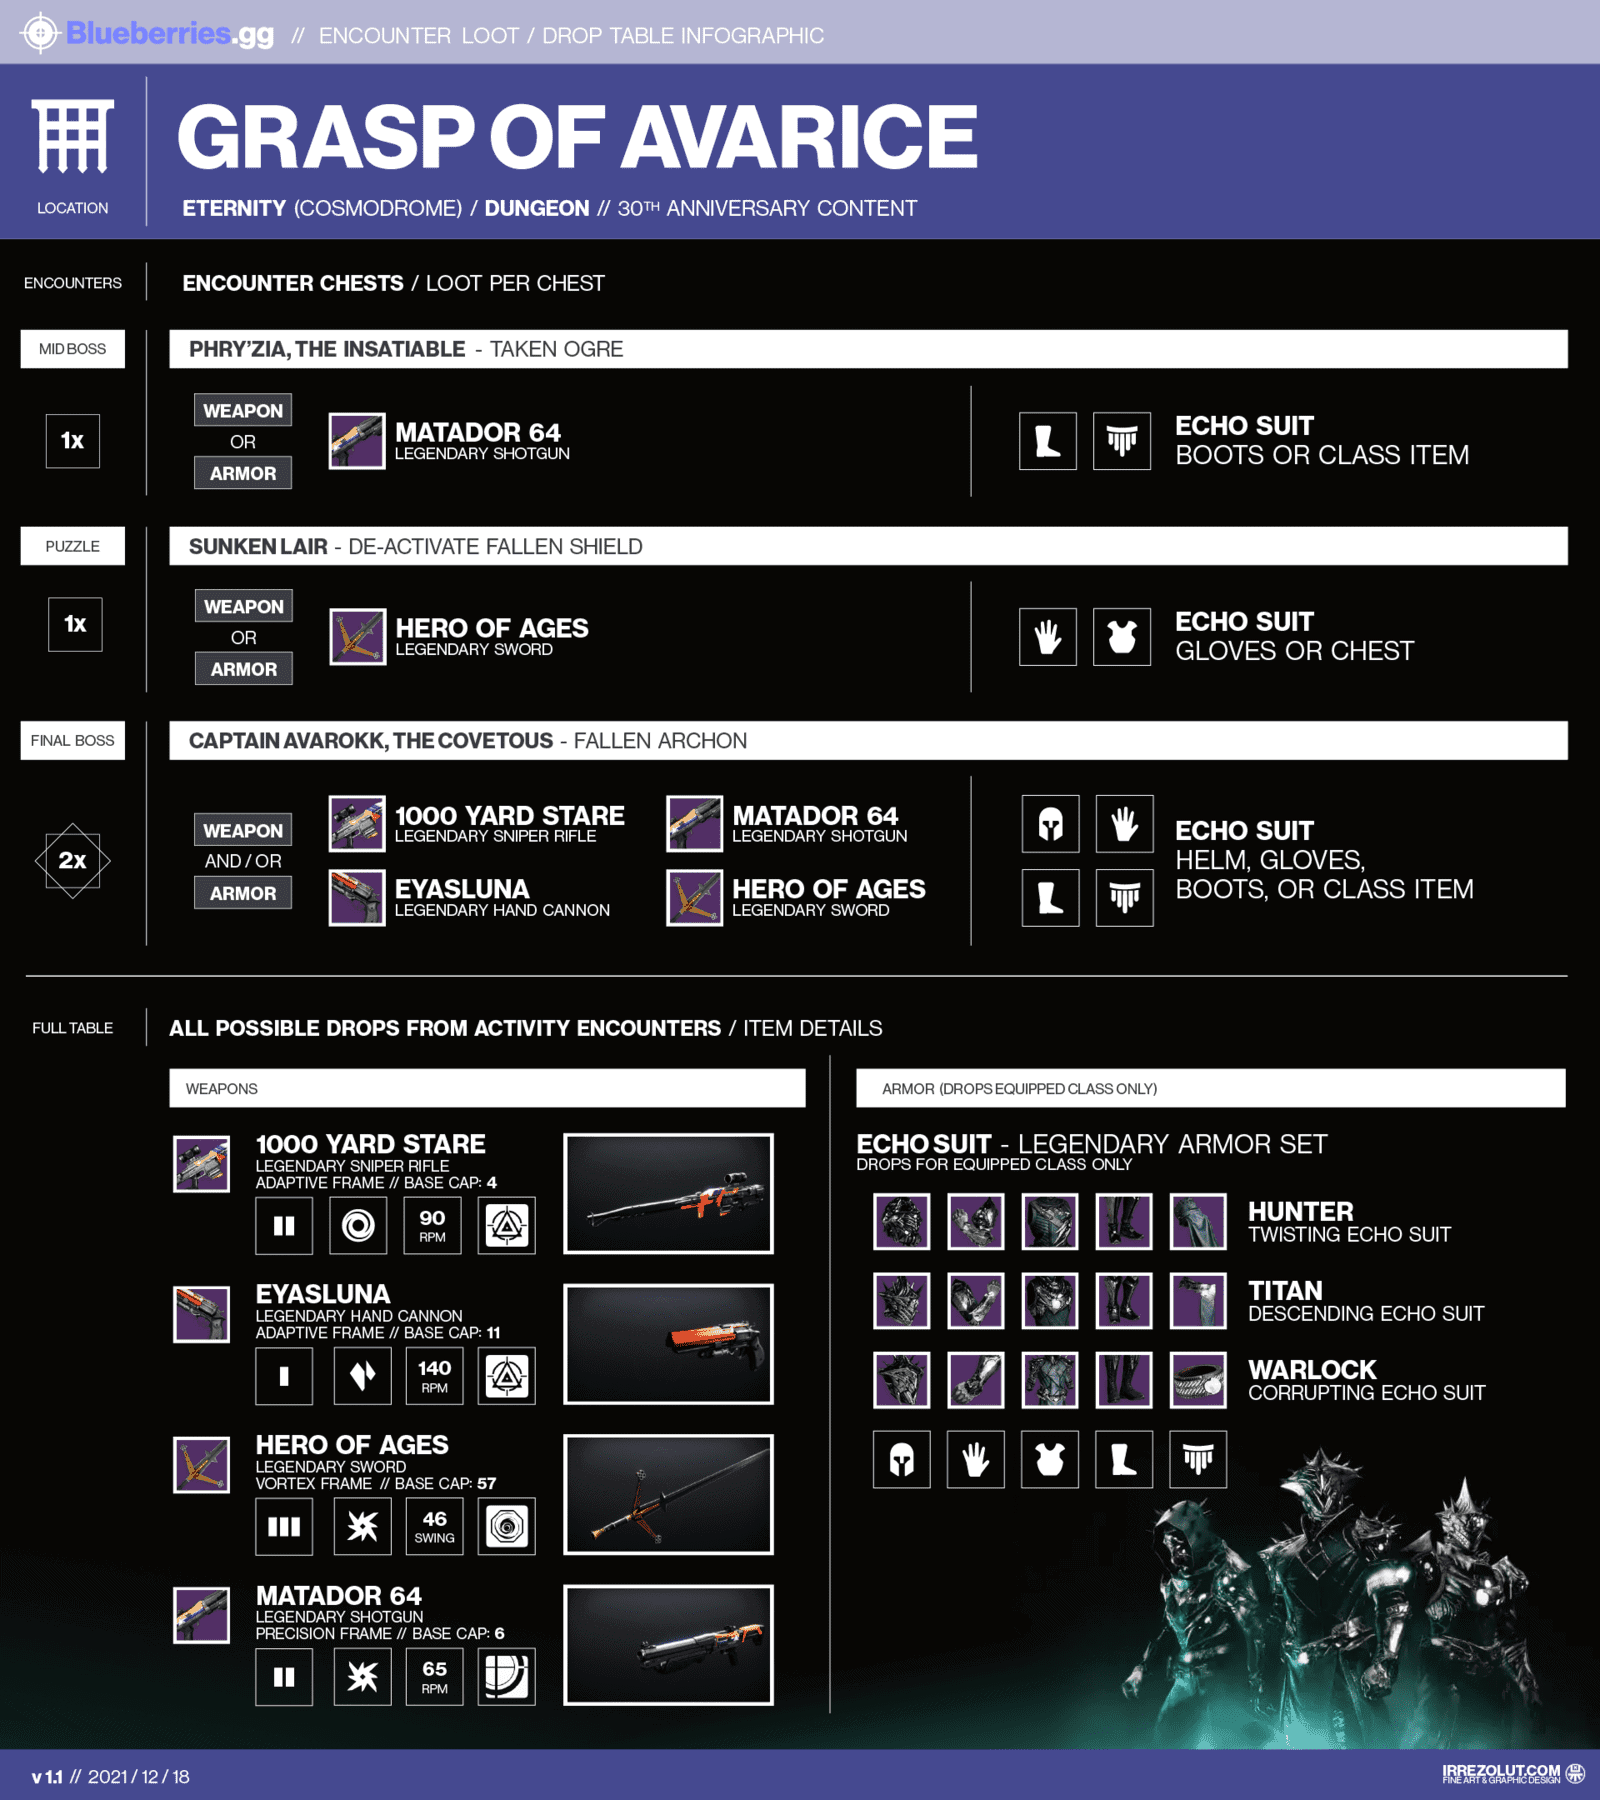 Grasp of Avarice loot table Infographic Destiny 2 v2